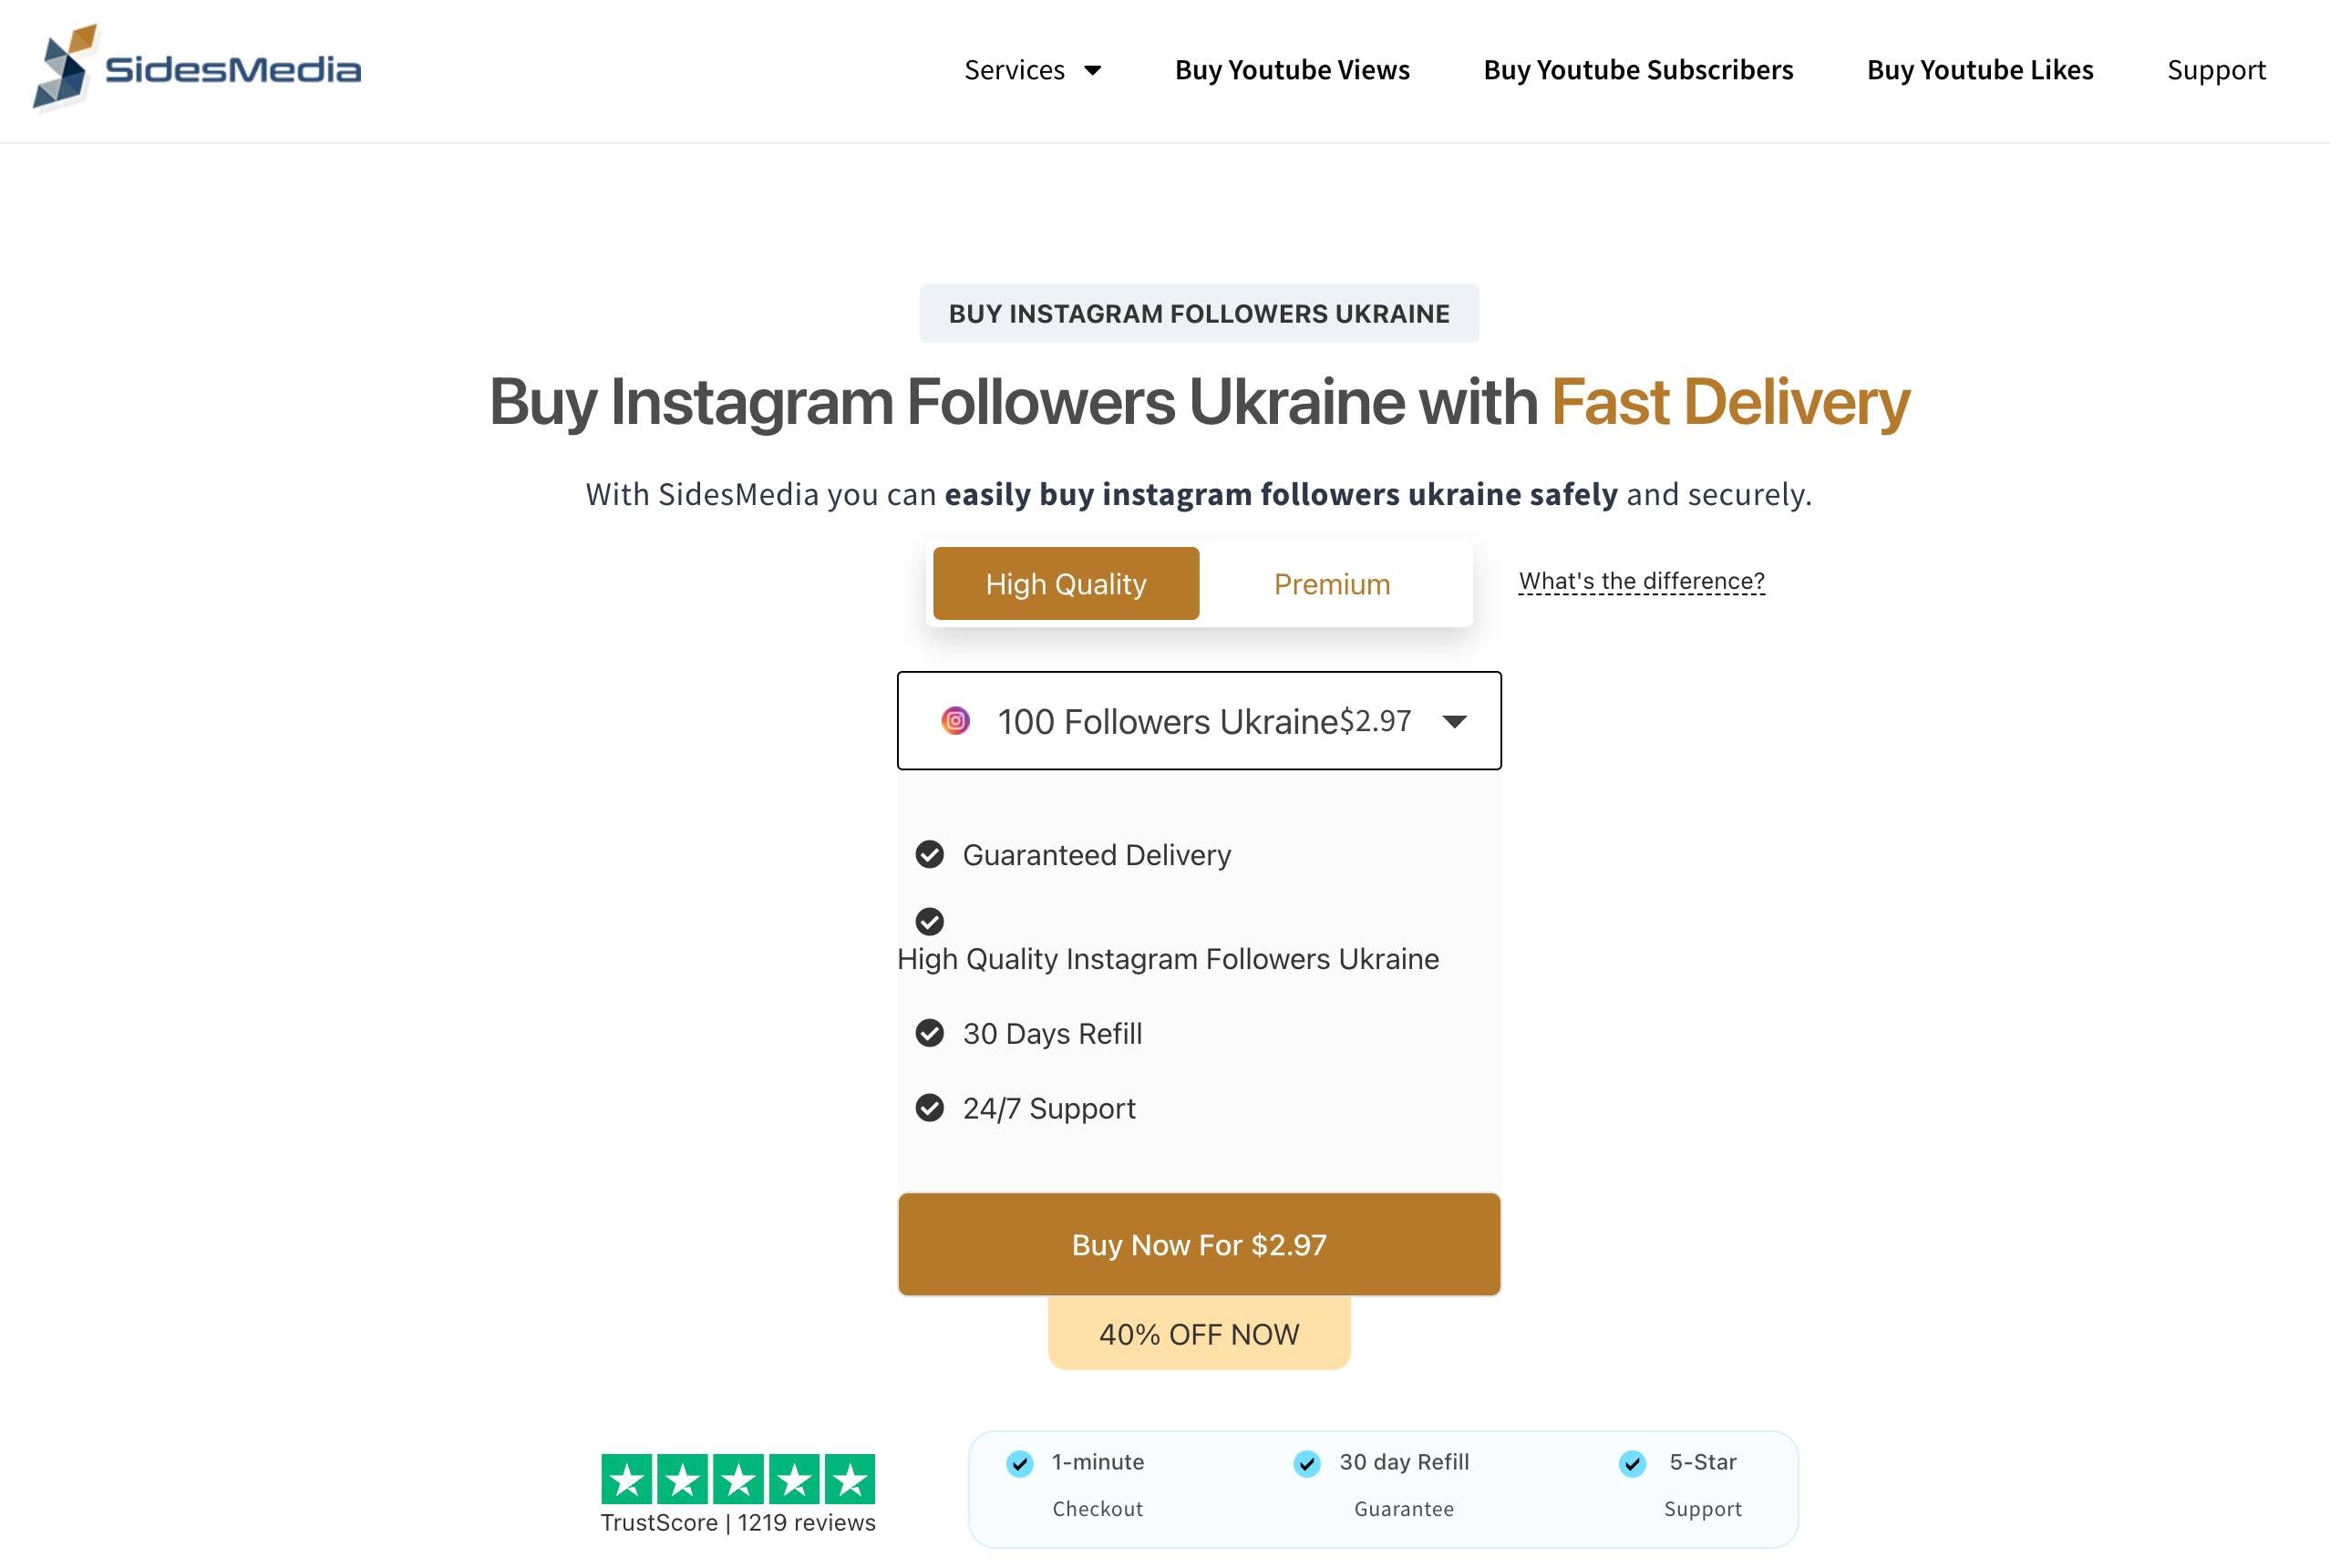 sidesmedia buy instagram followers ukraine page